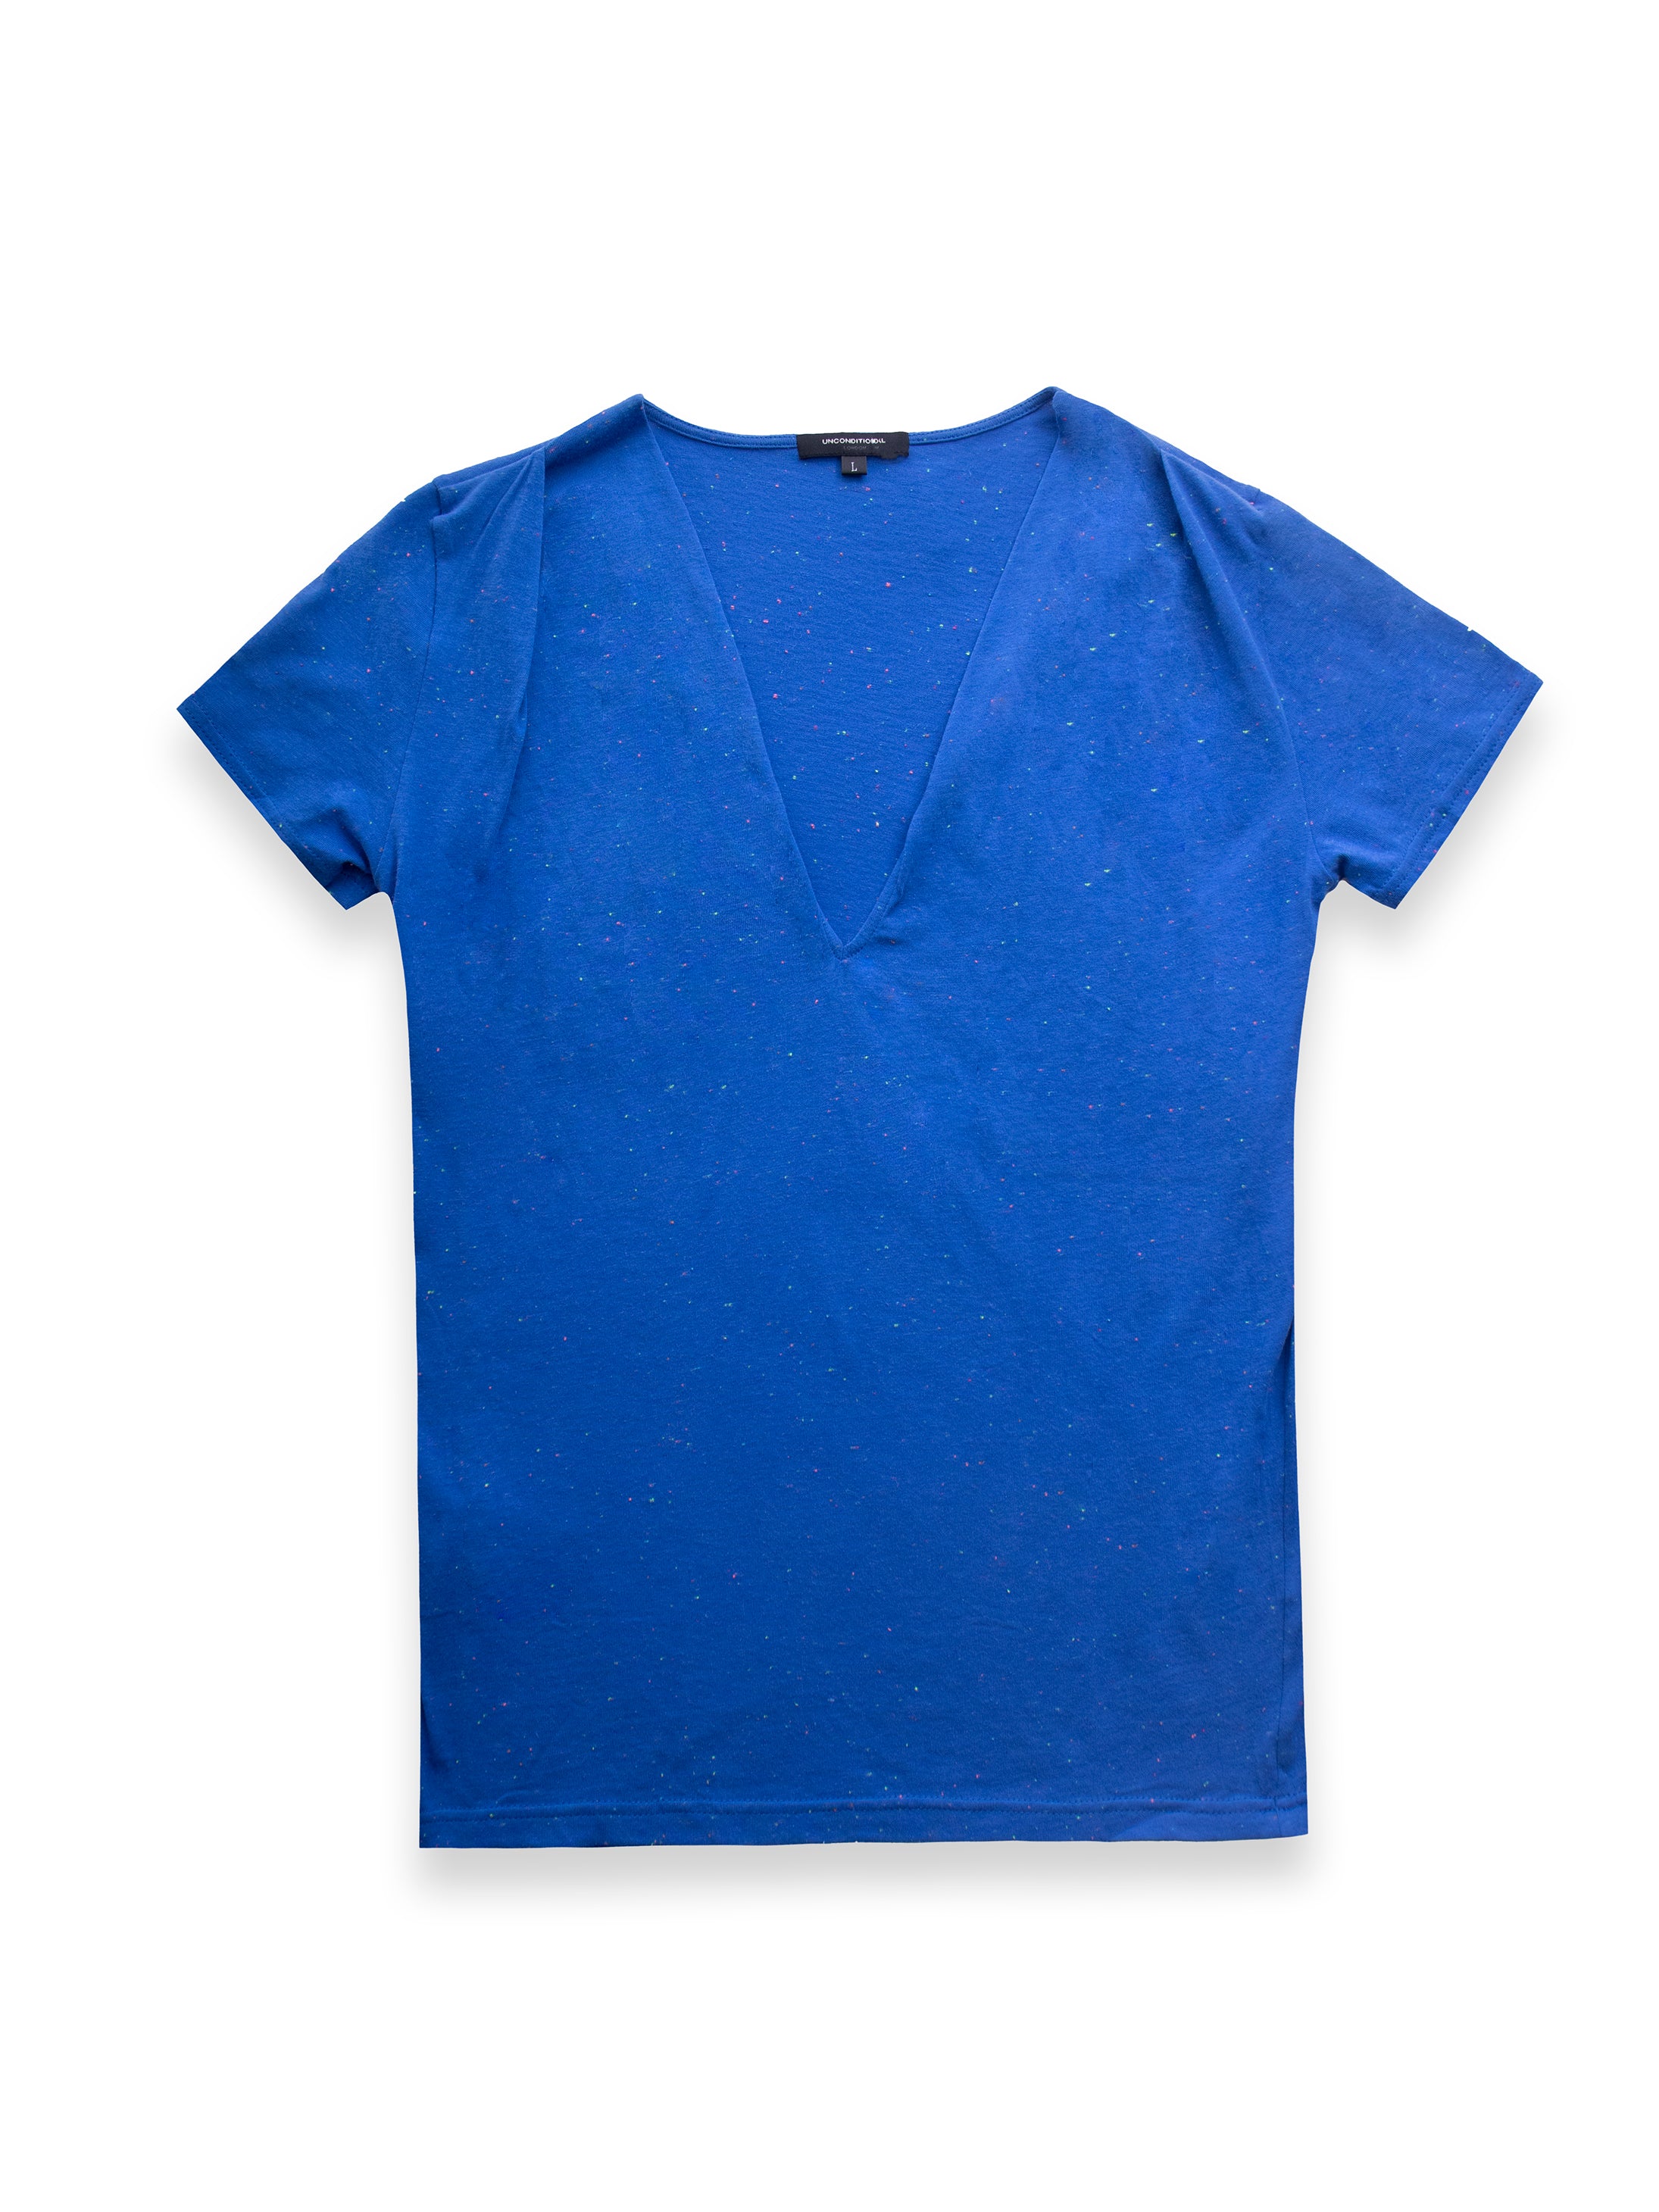 Blue T-Shirt Colourful Speckled Details